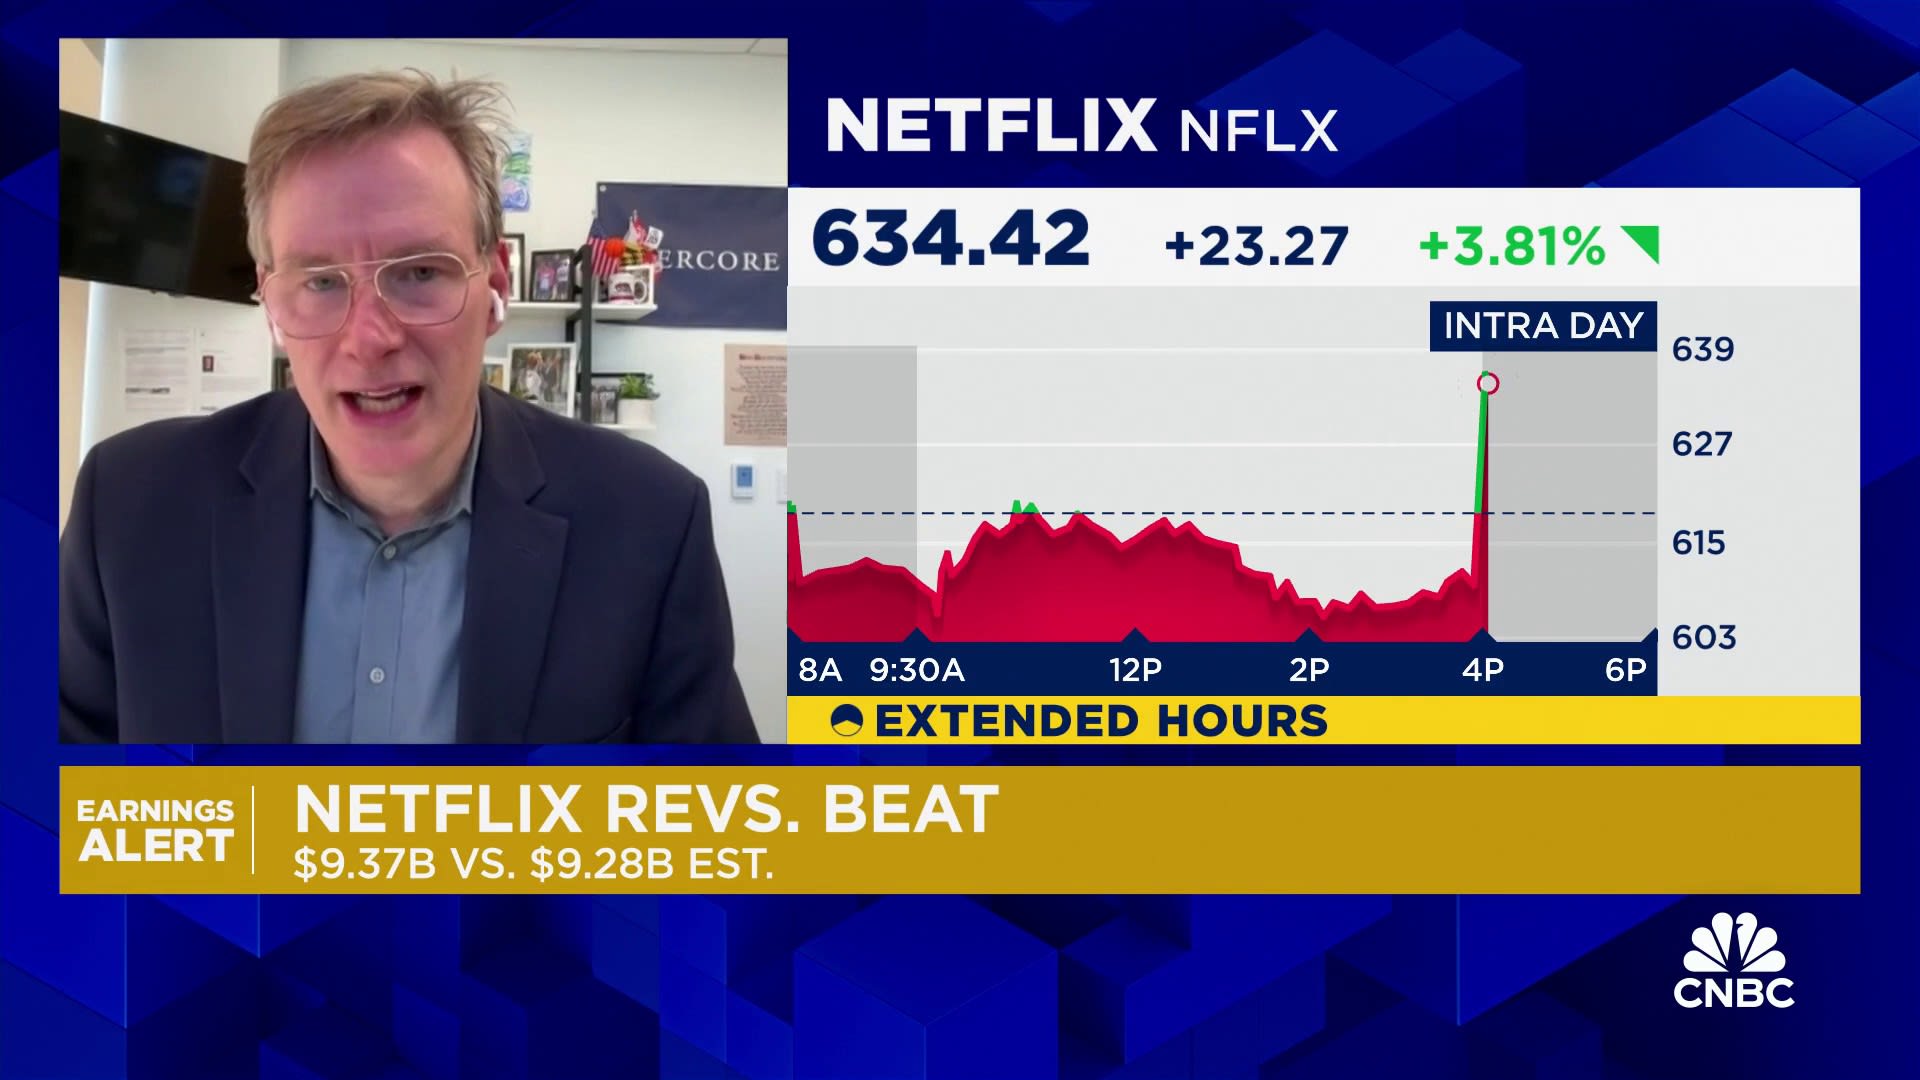 Netflix's quarterly subs performance 'really impressive', says Evercore's Mark Mahaney